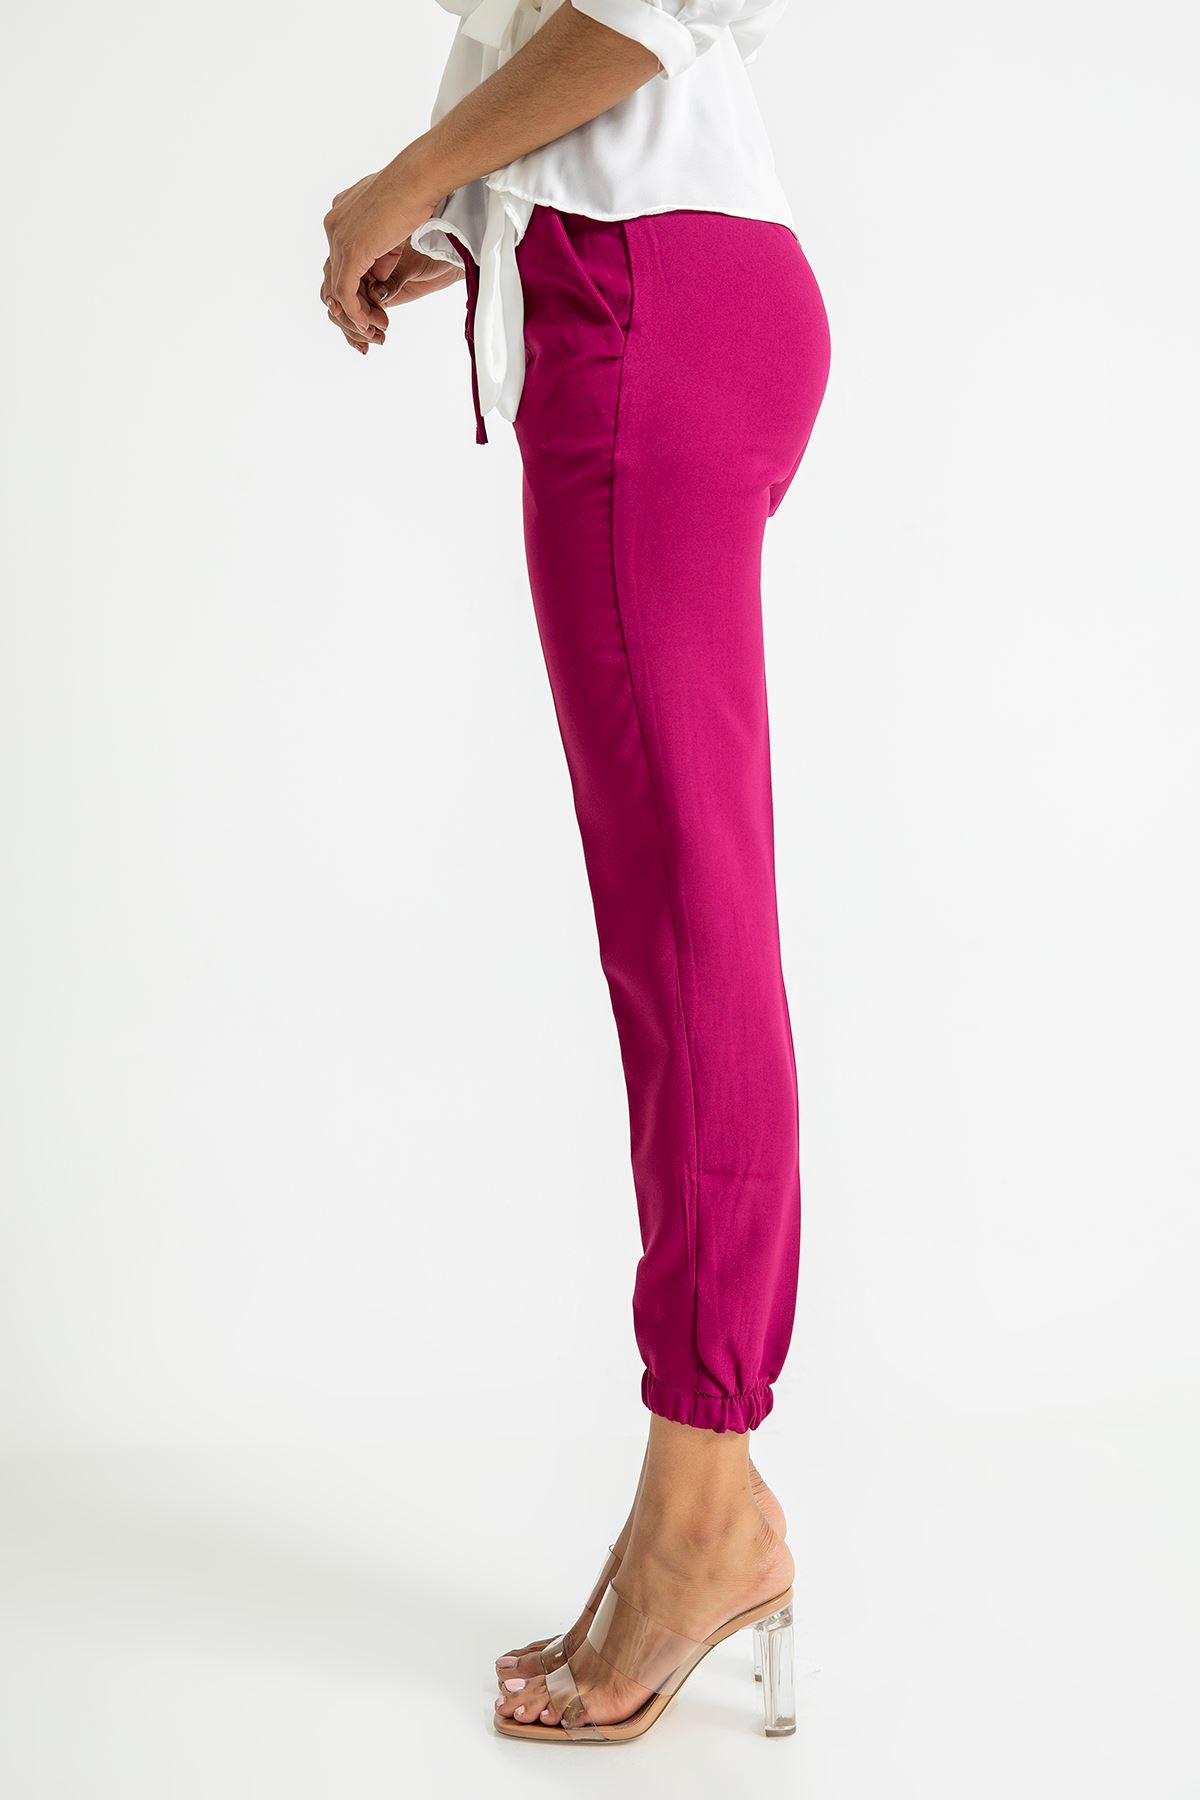 Atlas Fabric Ankle Length Elastic Waist Jogger Women'S Trouser - Plum